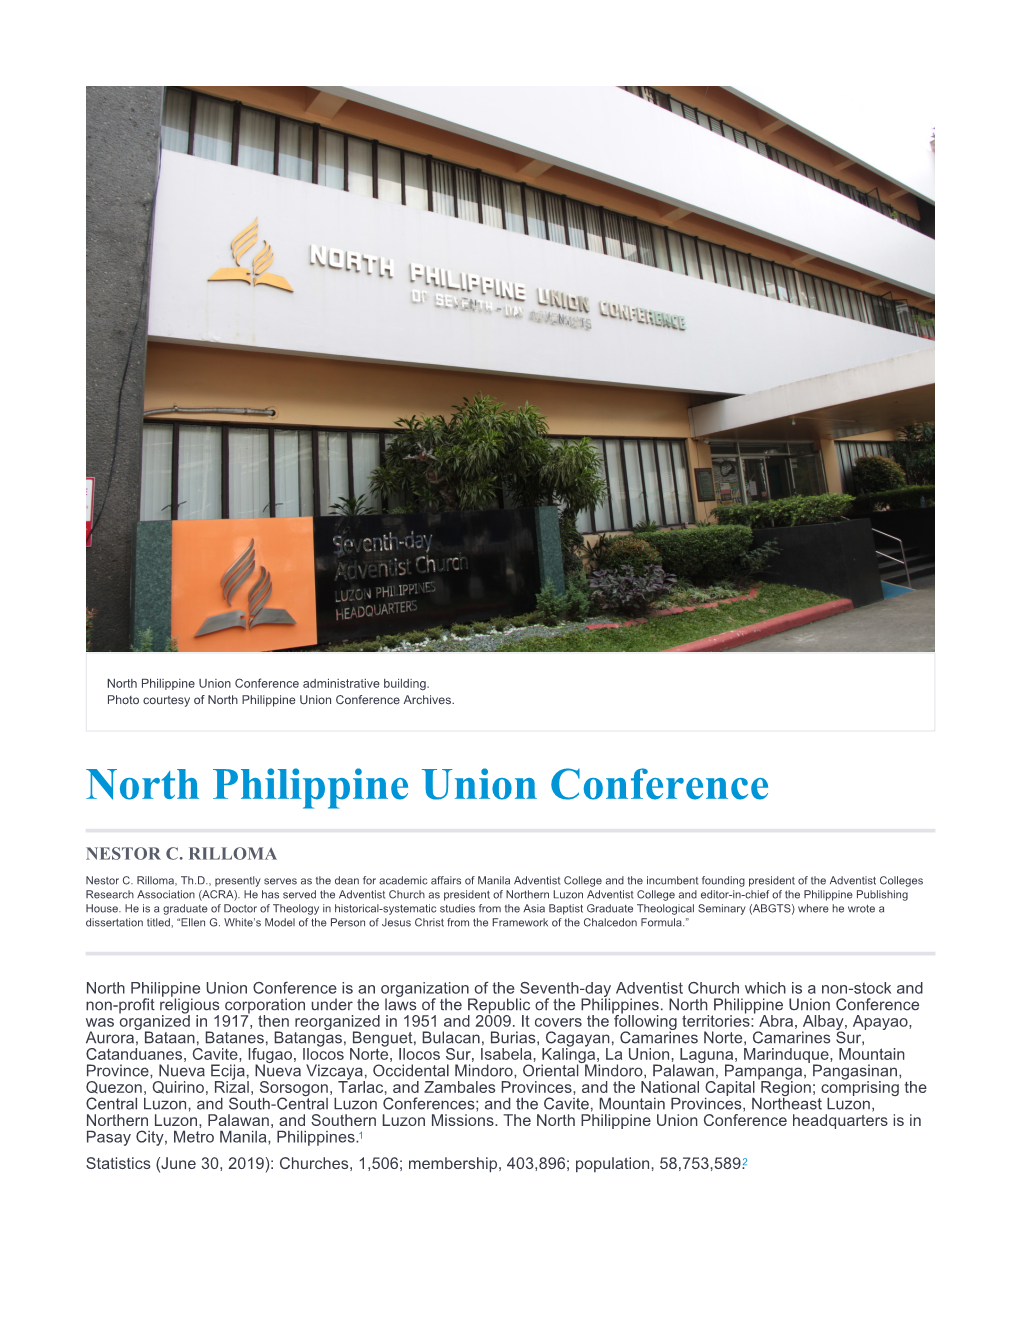 North Philippine Union Conference Administrative Building